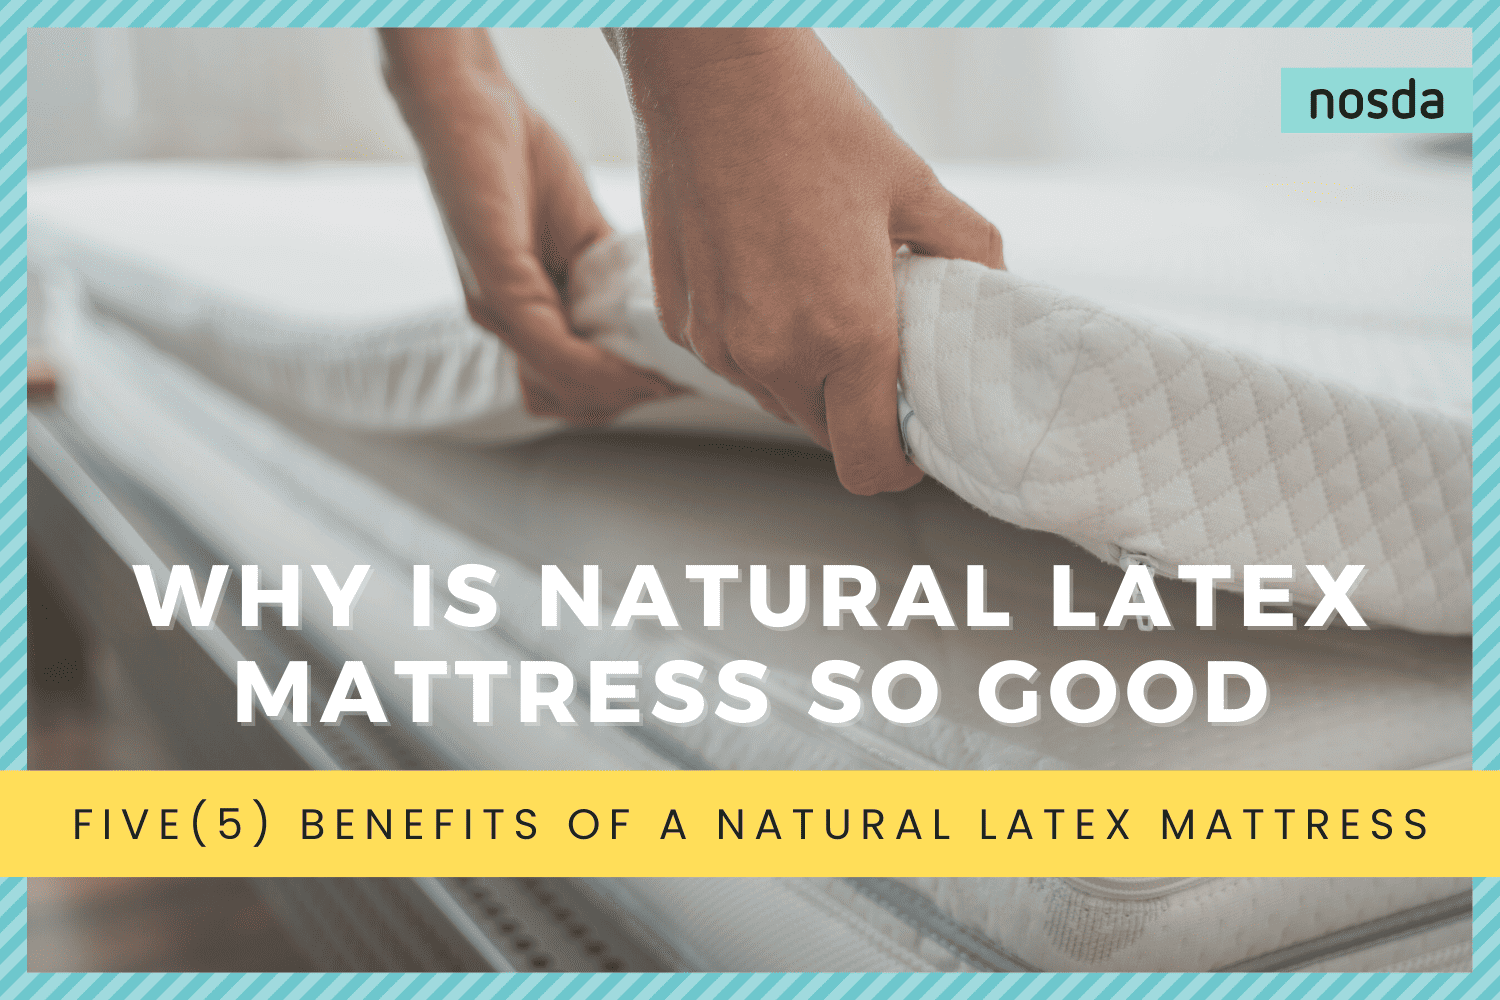 Benefits of a Natural Latex Mattress